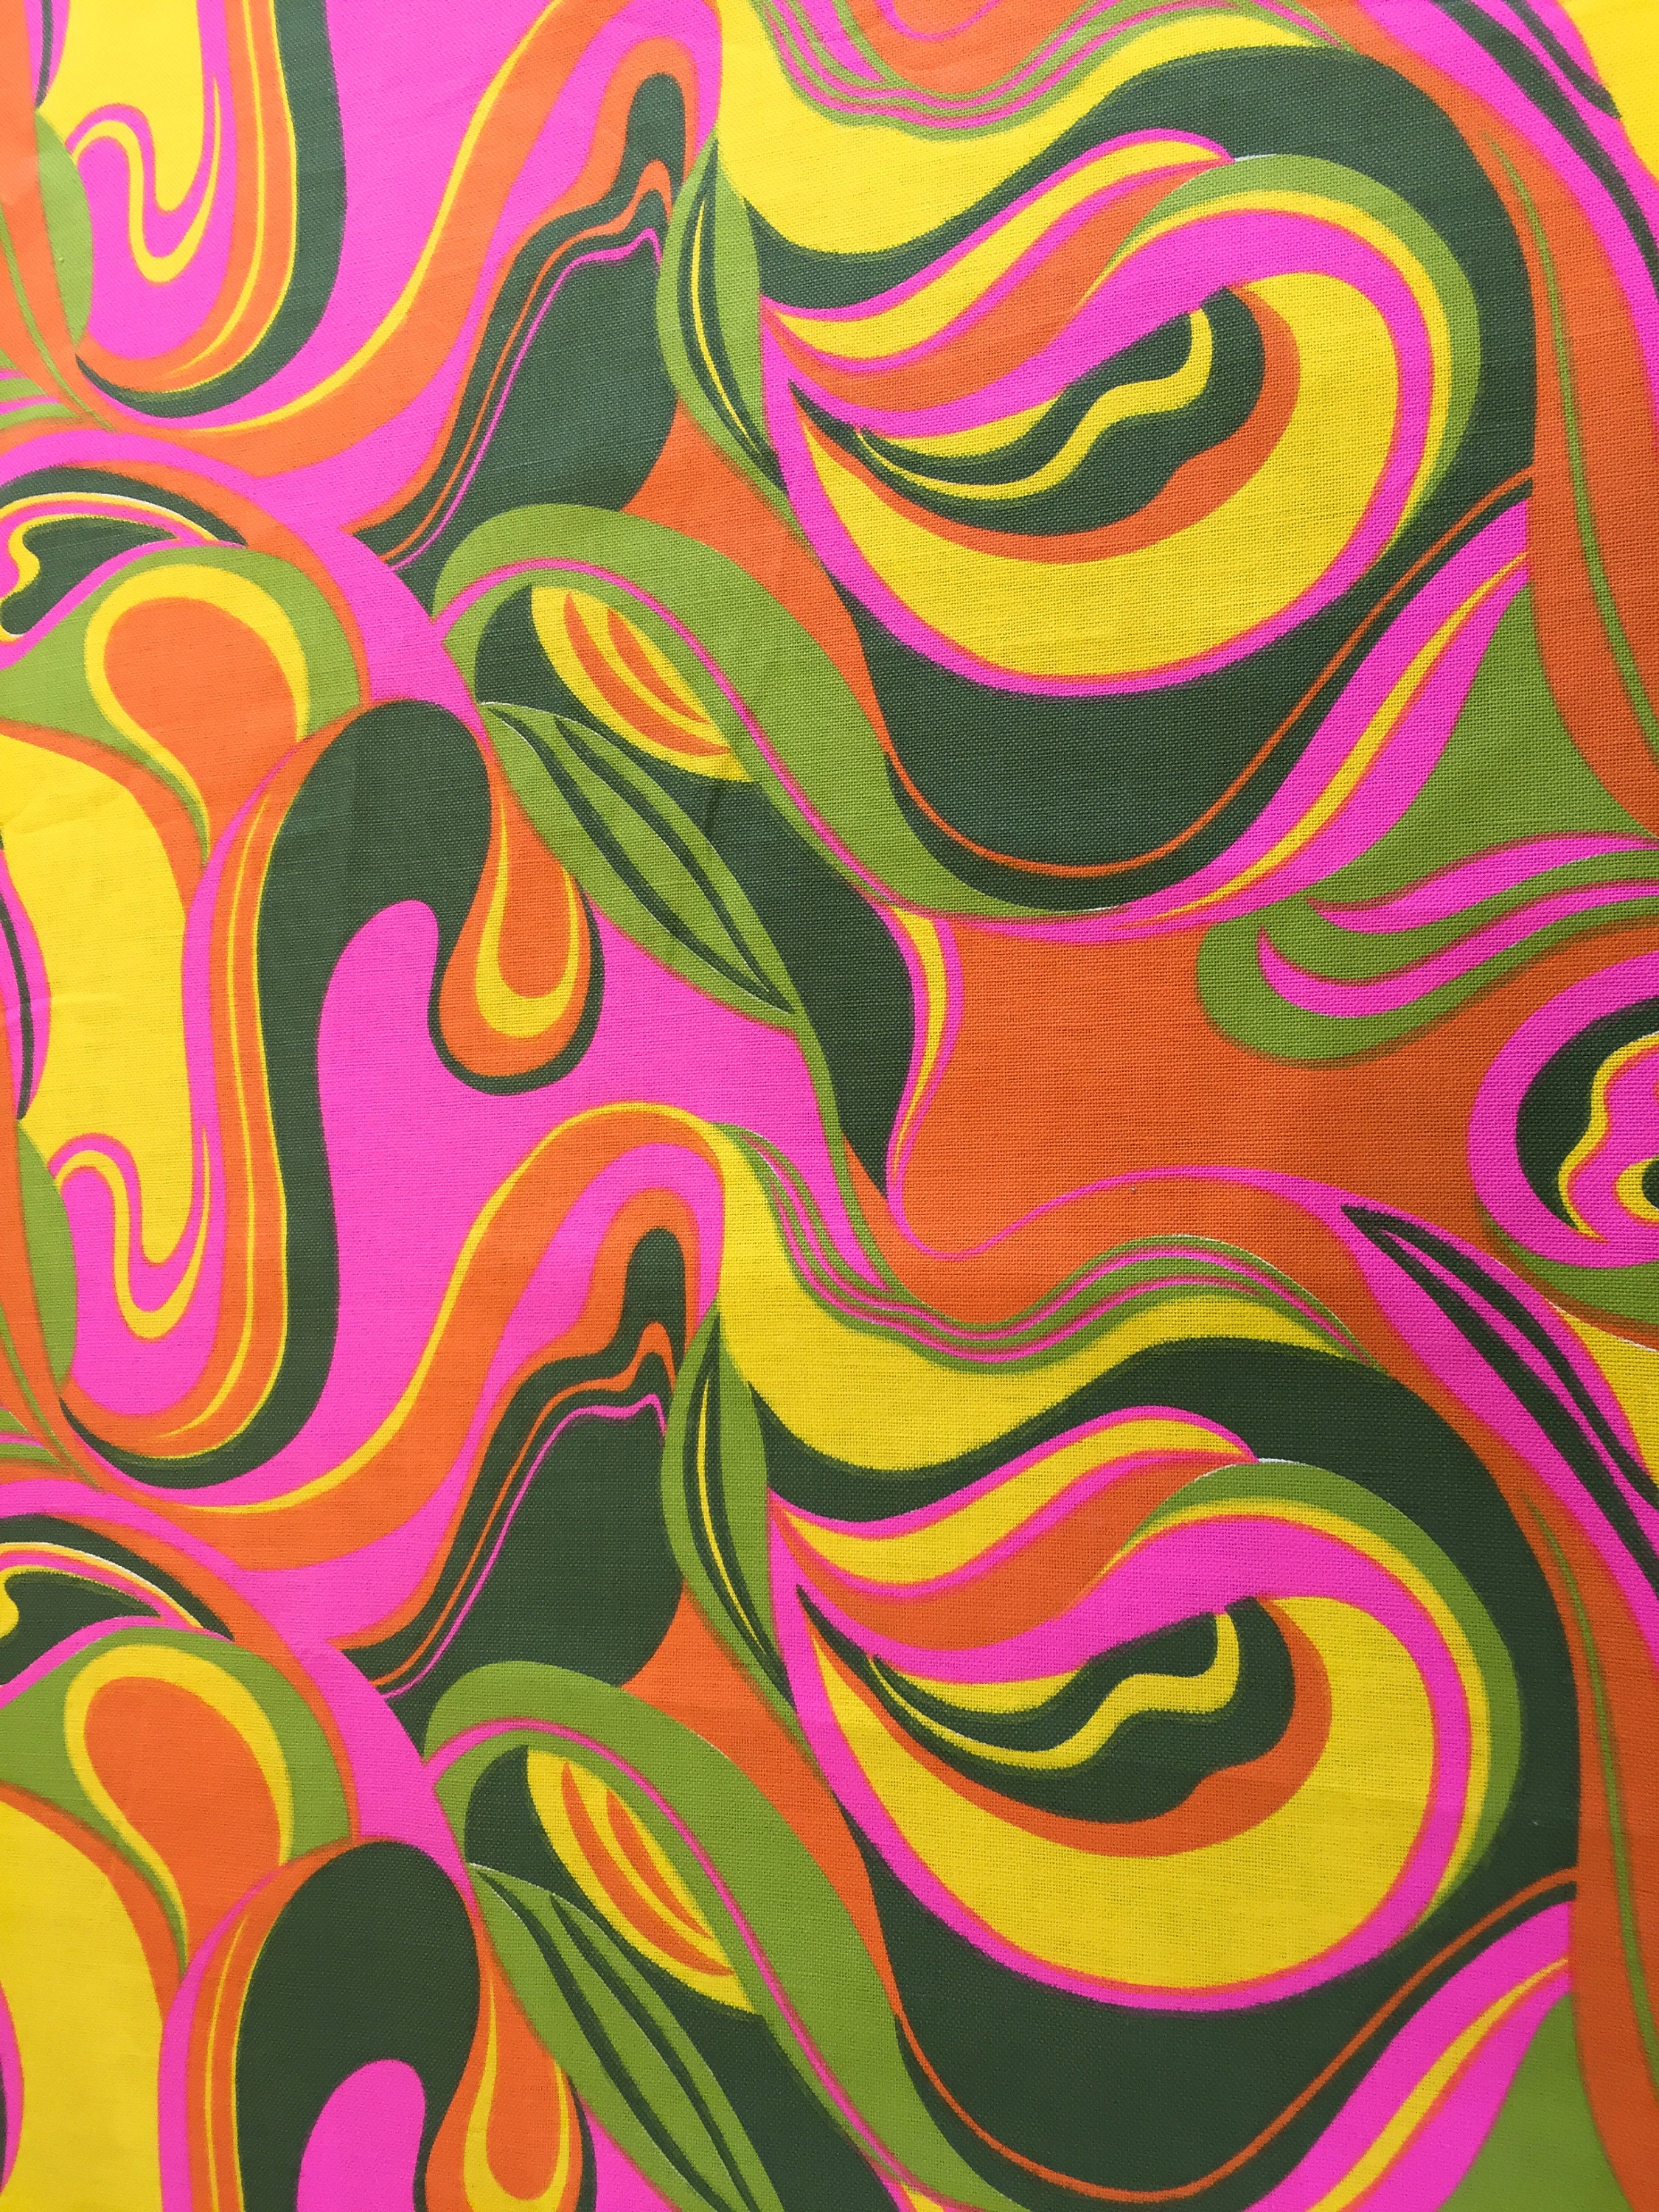 Psychedelic Swirls Cotton Canvas 4.5 yards / 5.5 yards True | Etsy